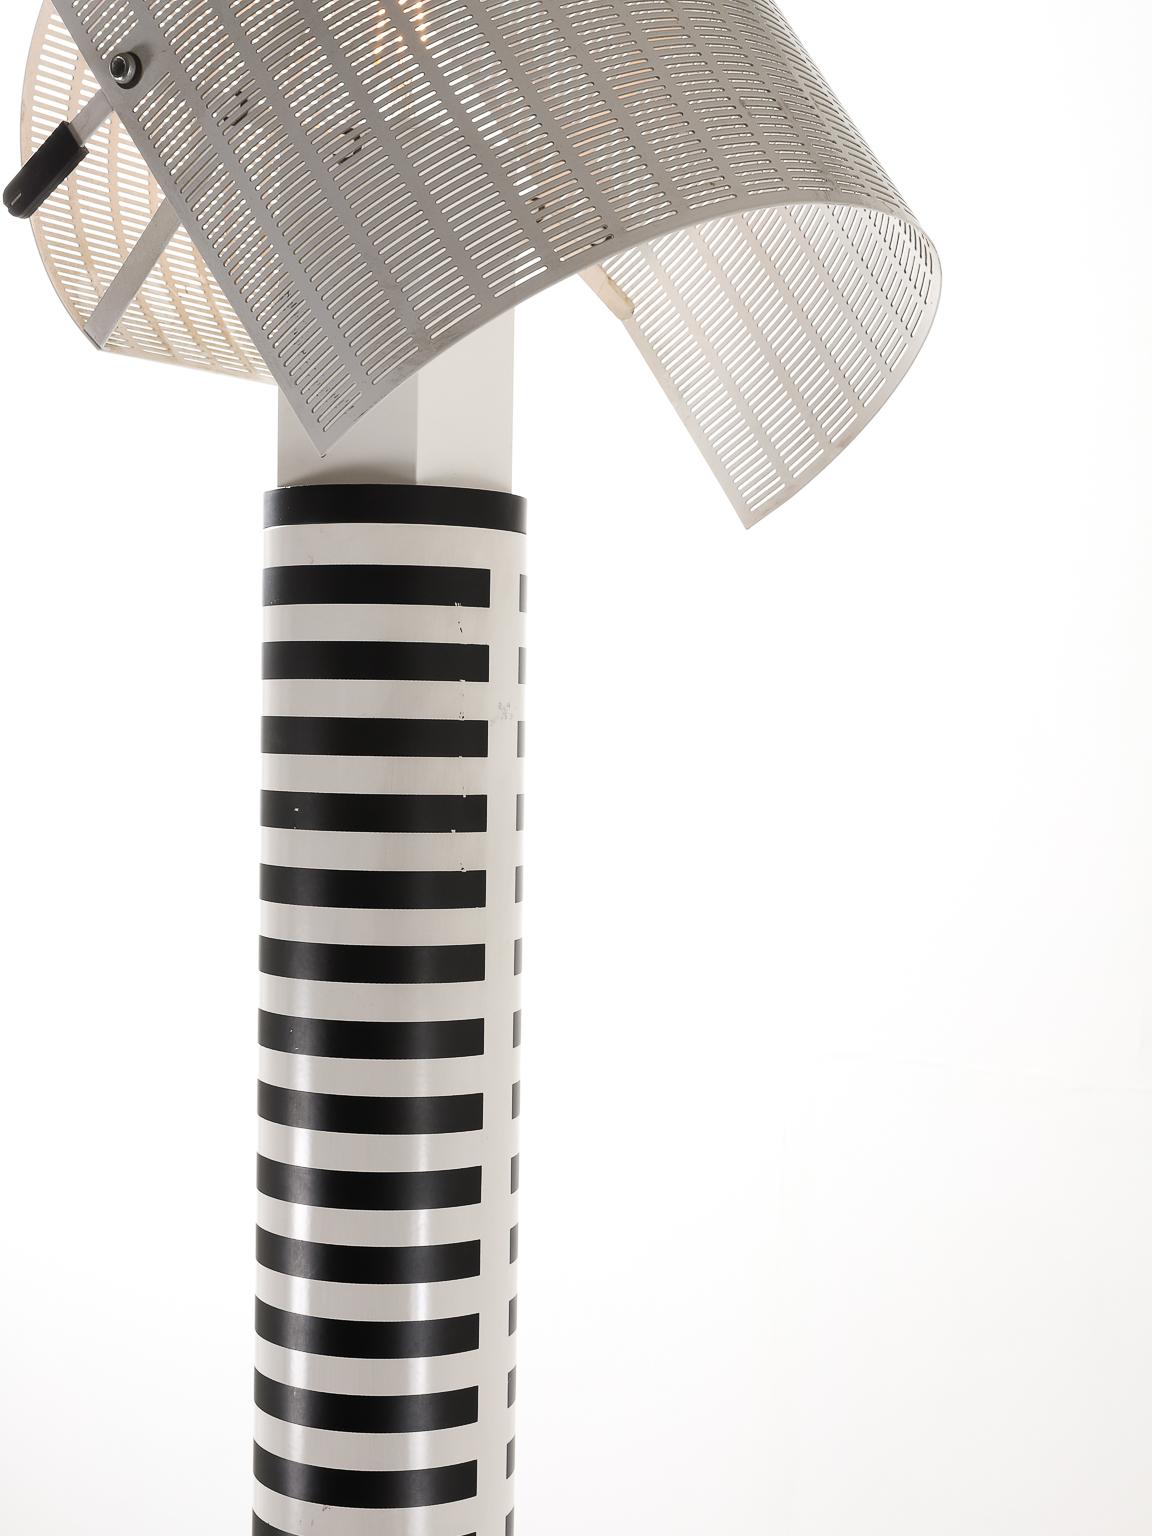 20th Century Artemide 'Shogun' 1980s Floor Lamp designed by Mario Botta